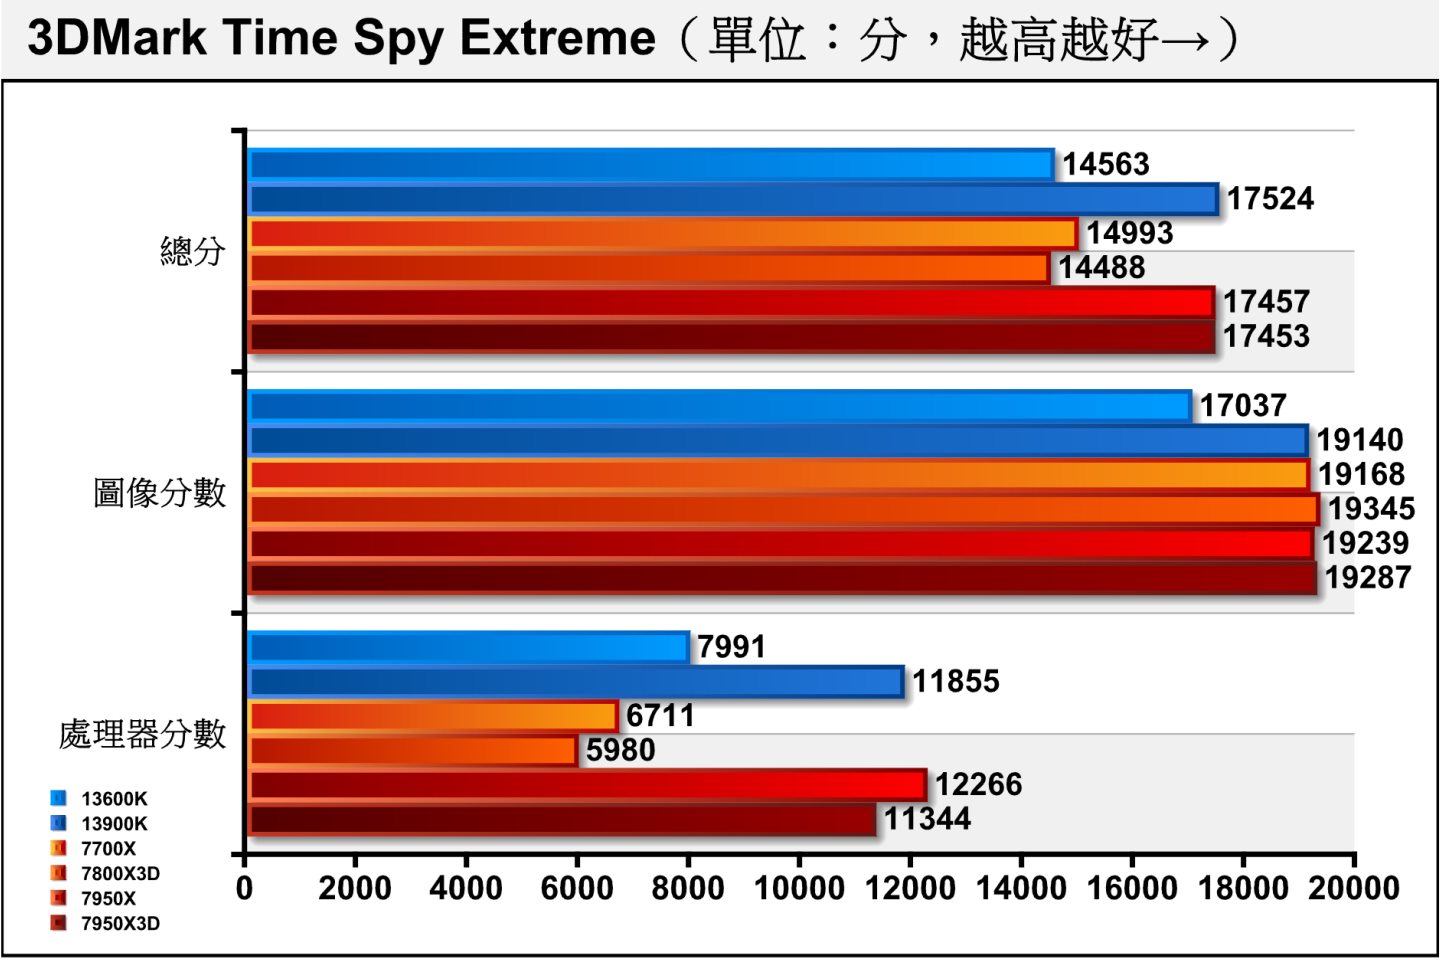 Time Spy Extreme將解析度提升至4K（3840 x 2160）並增加運算負擔，7800X3D同樣在處理器分數落後7700X。